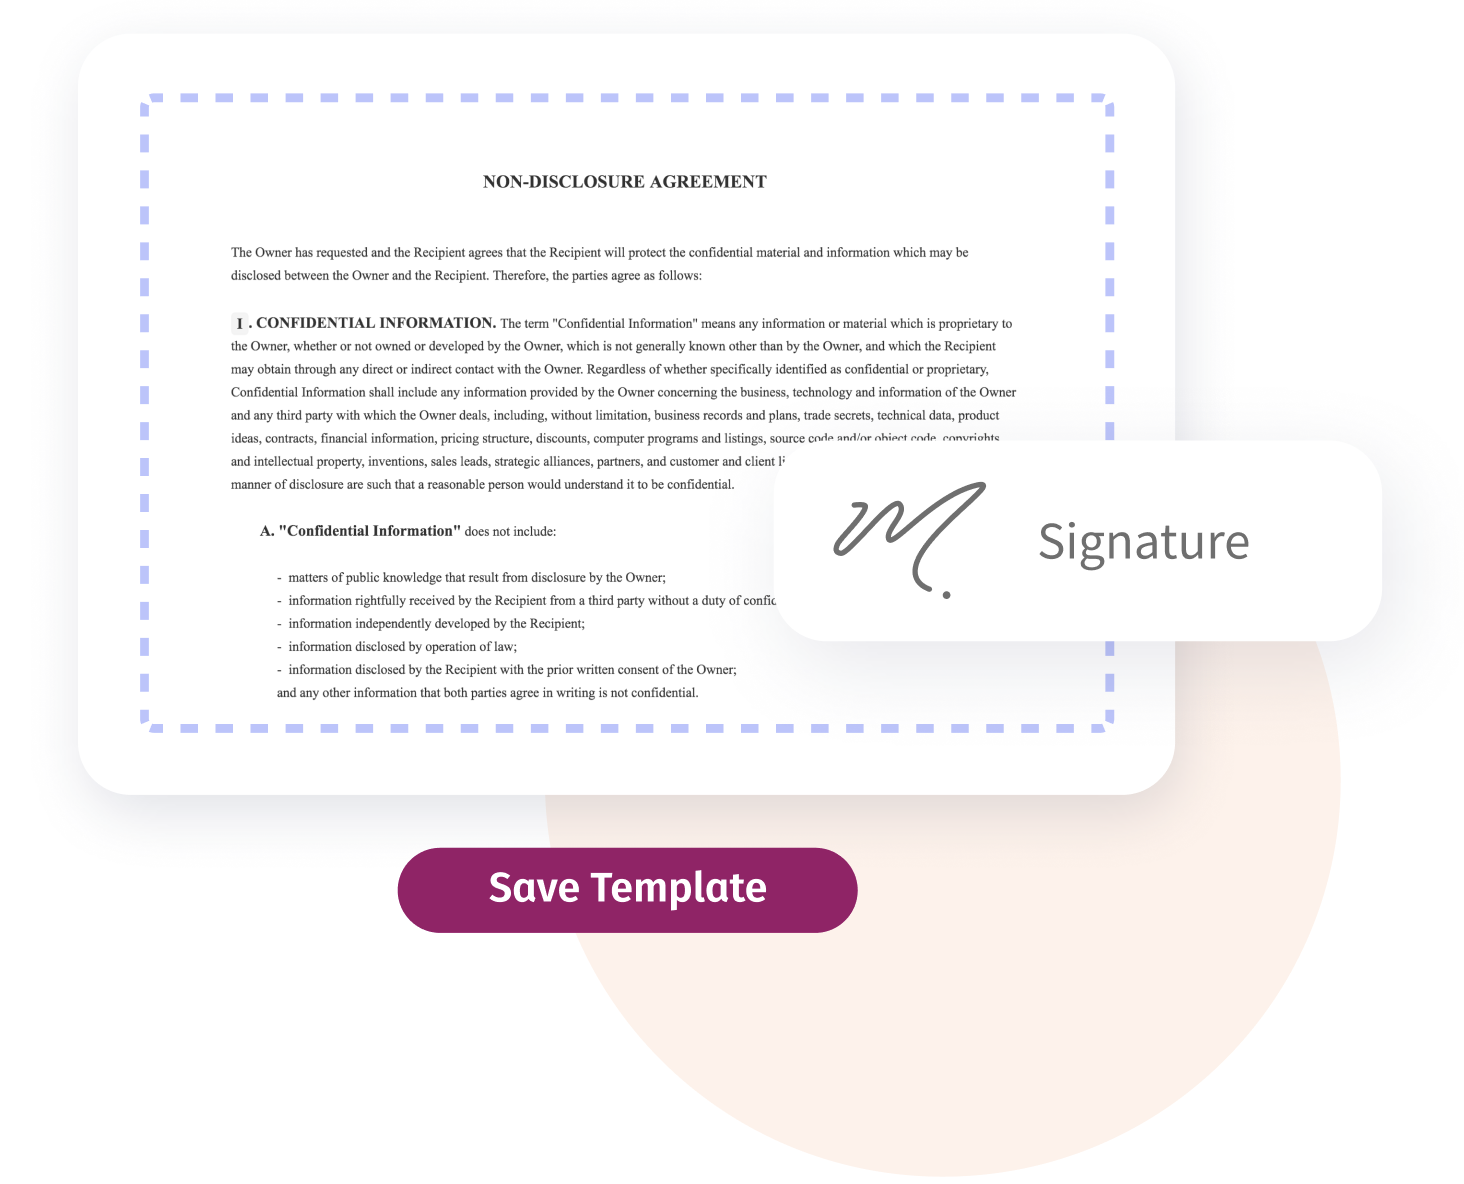 Digital document signing feature